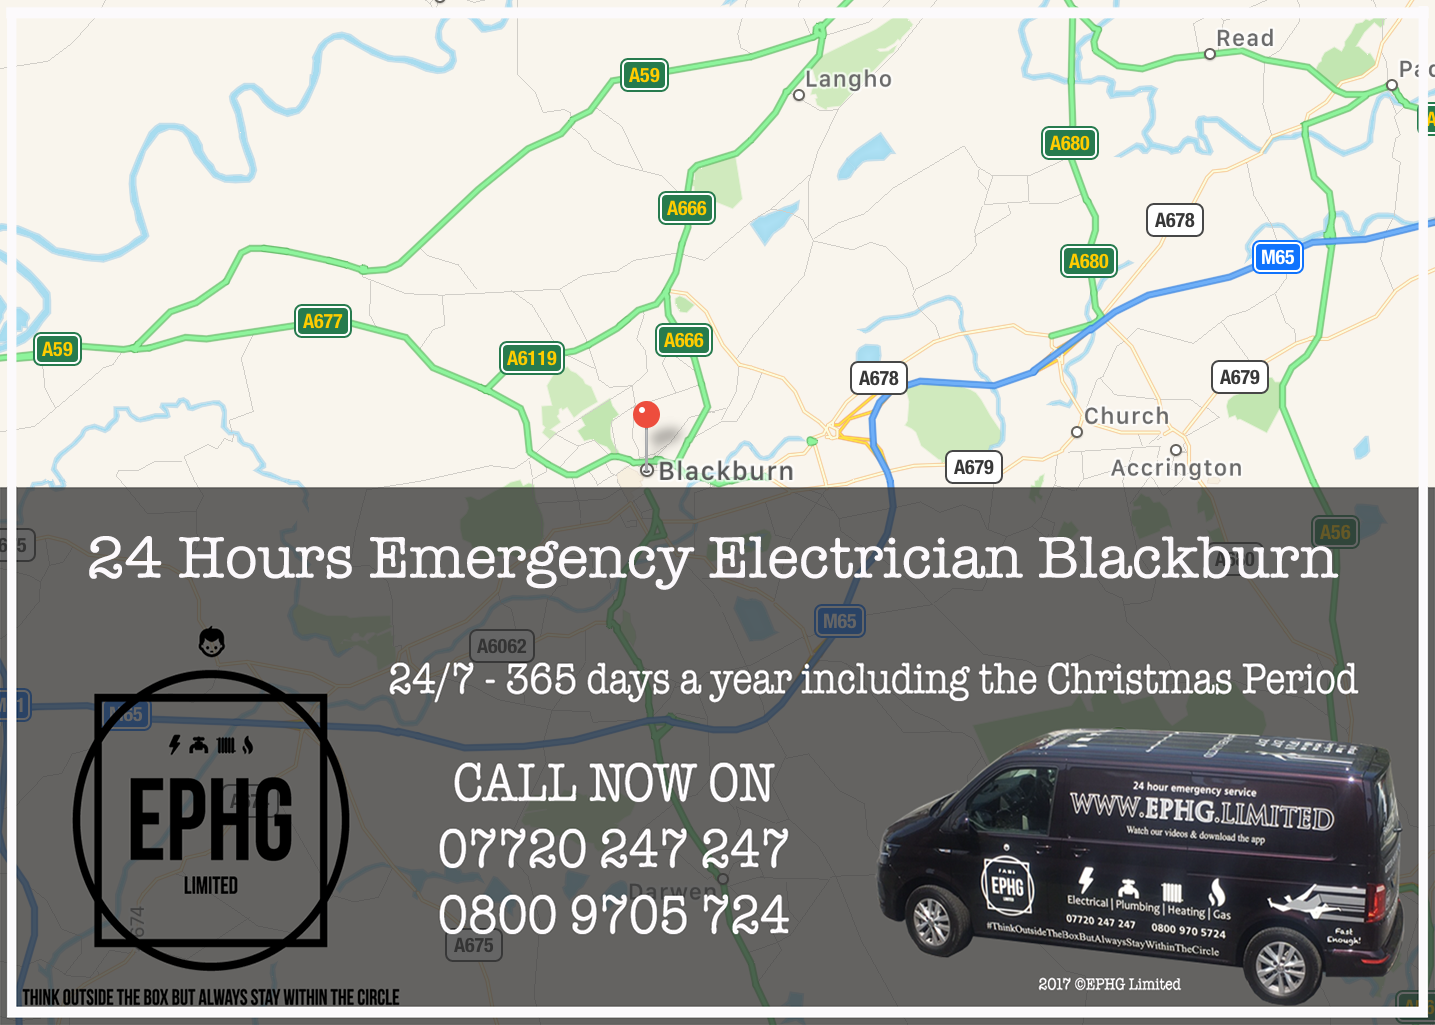 24 Hour Emergency Electrician Blackbburn